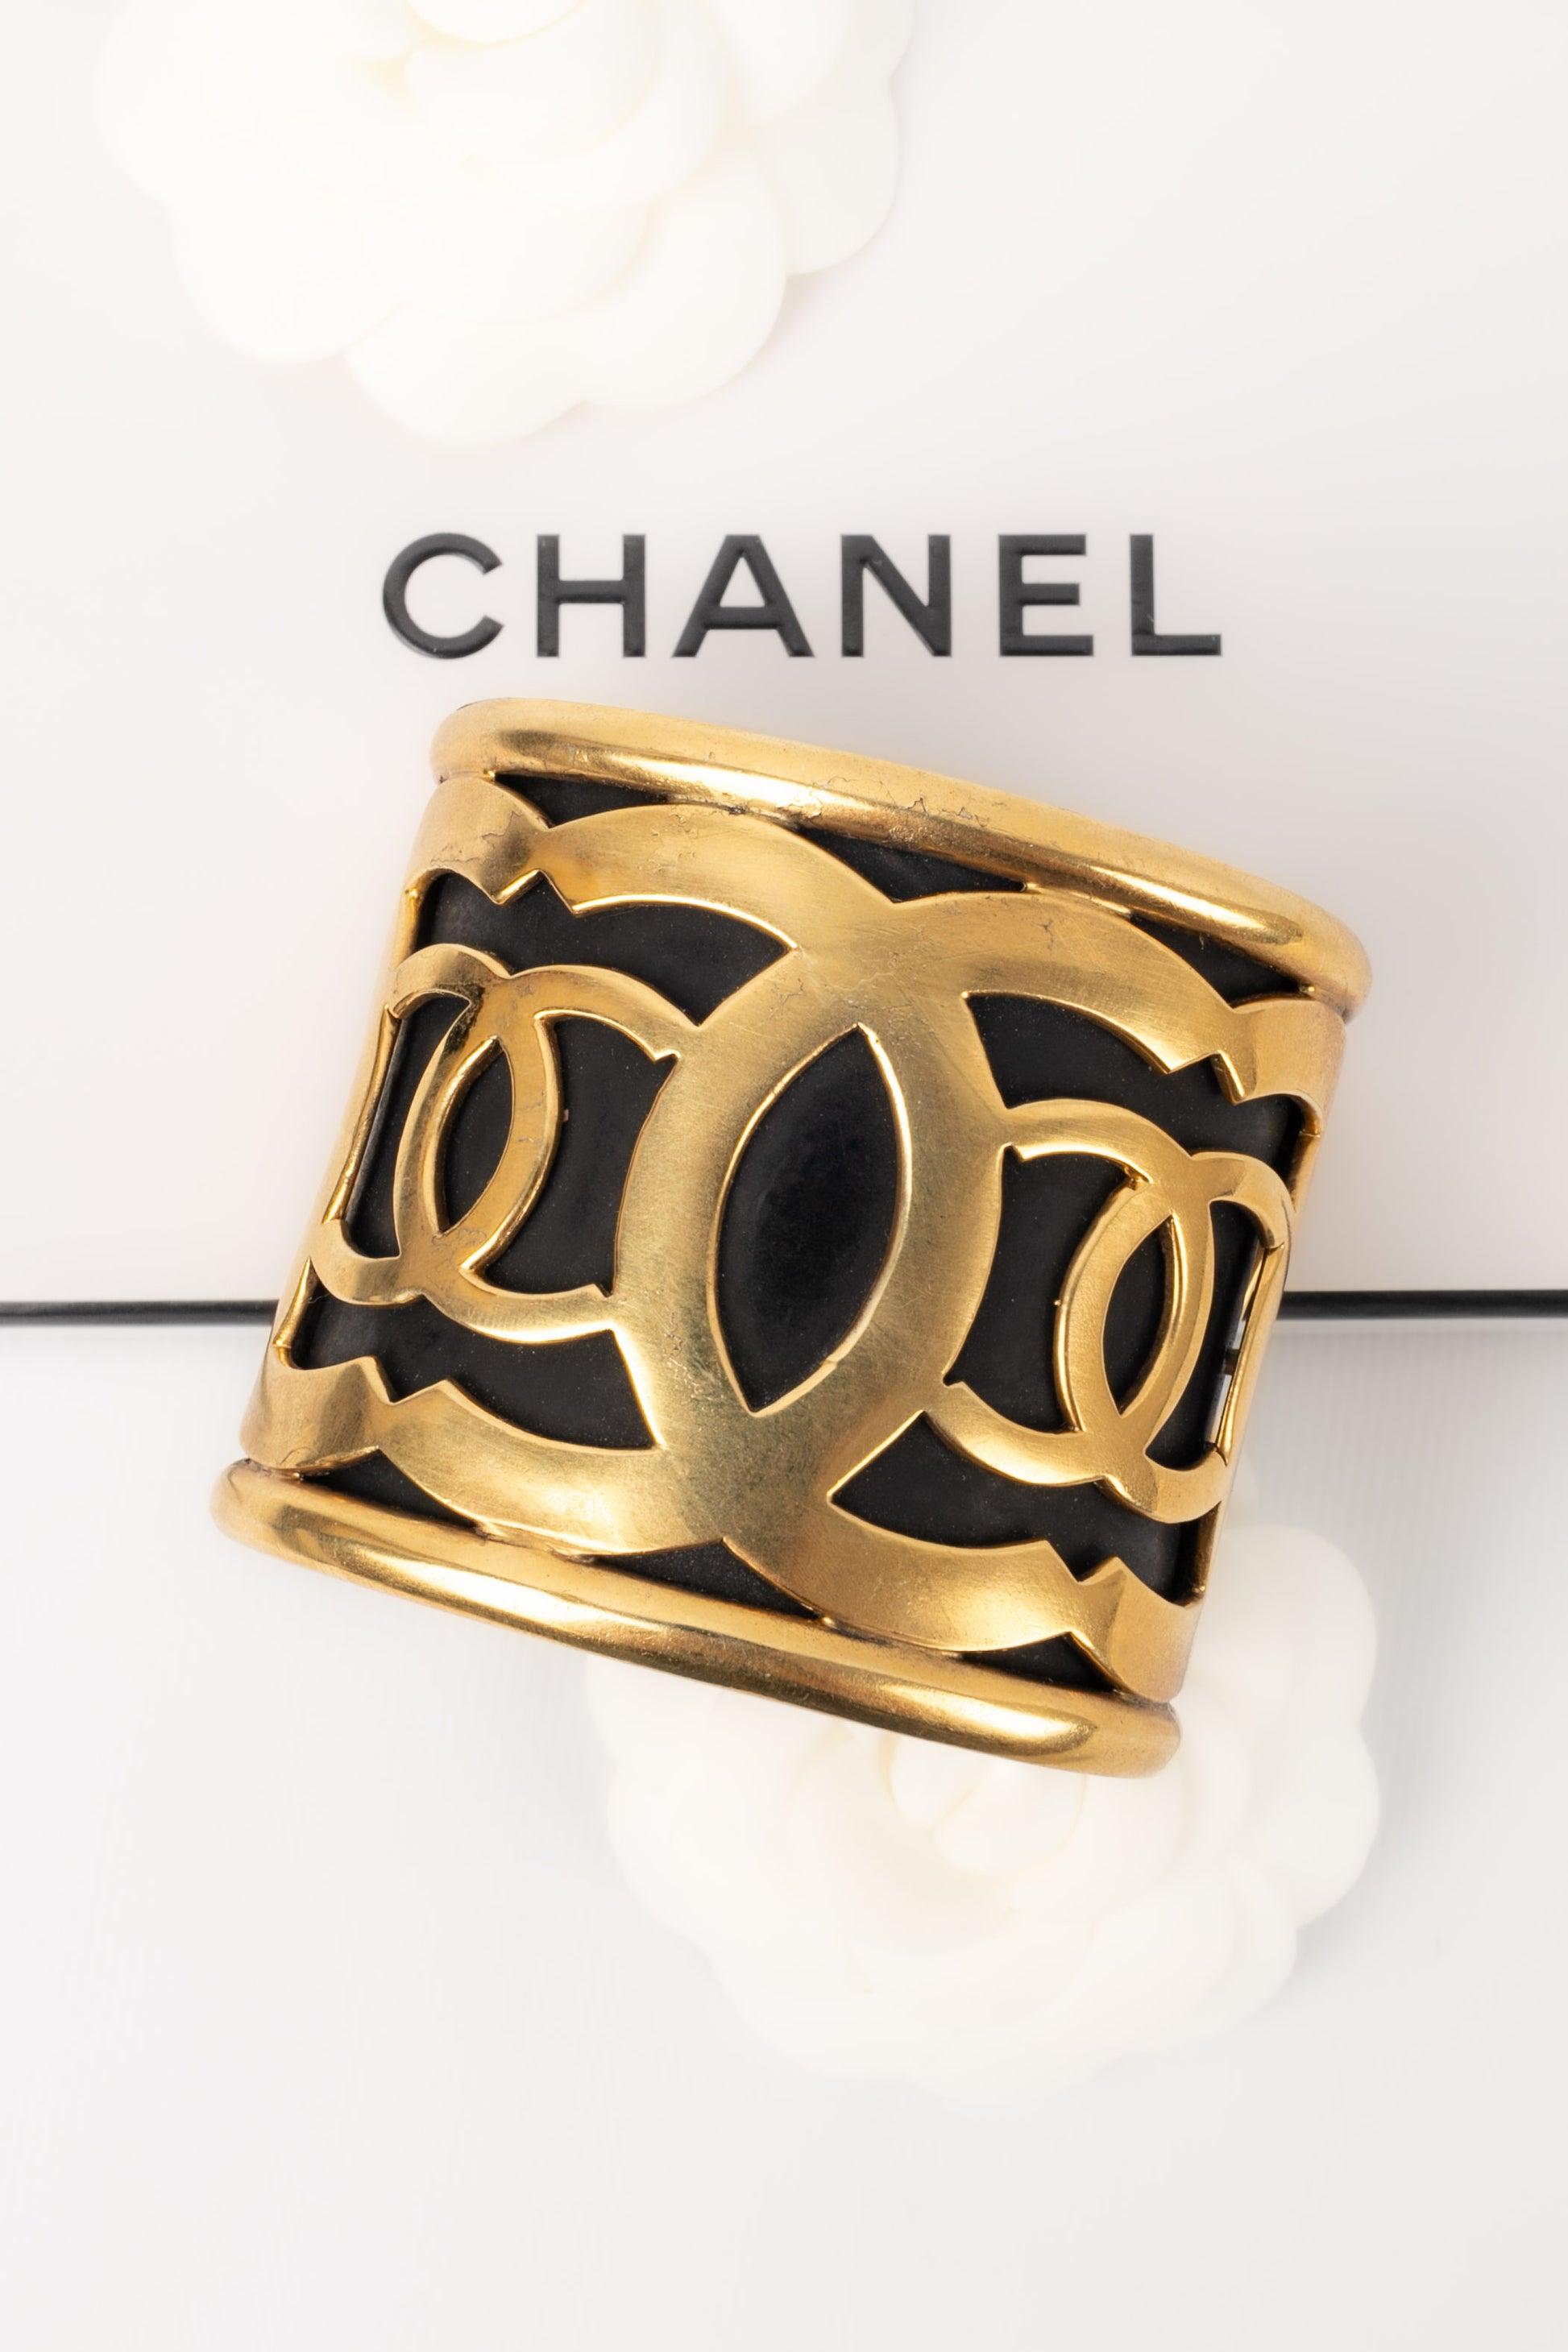 Chanel Cuff Bracelet in Golden Metal on a Black Background For Sale 4